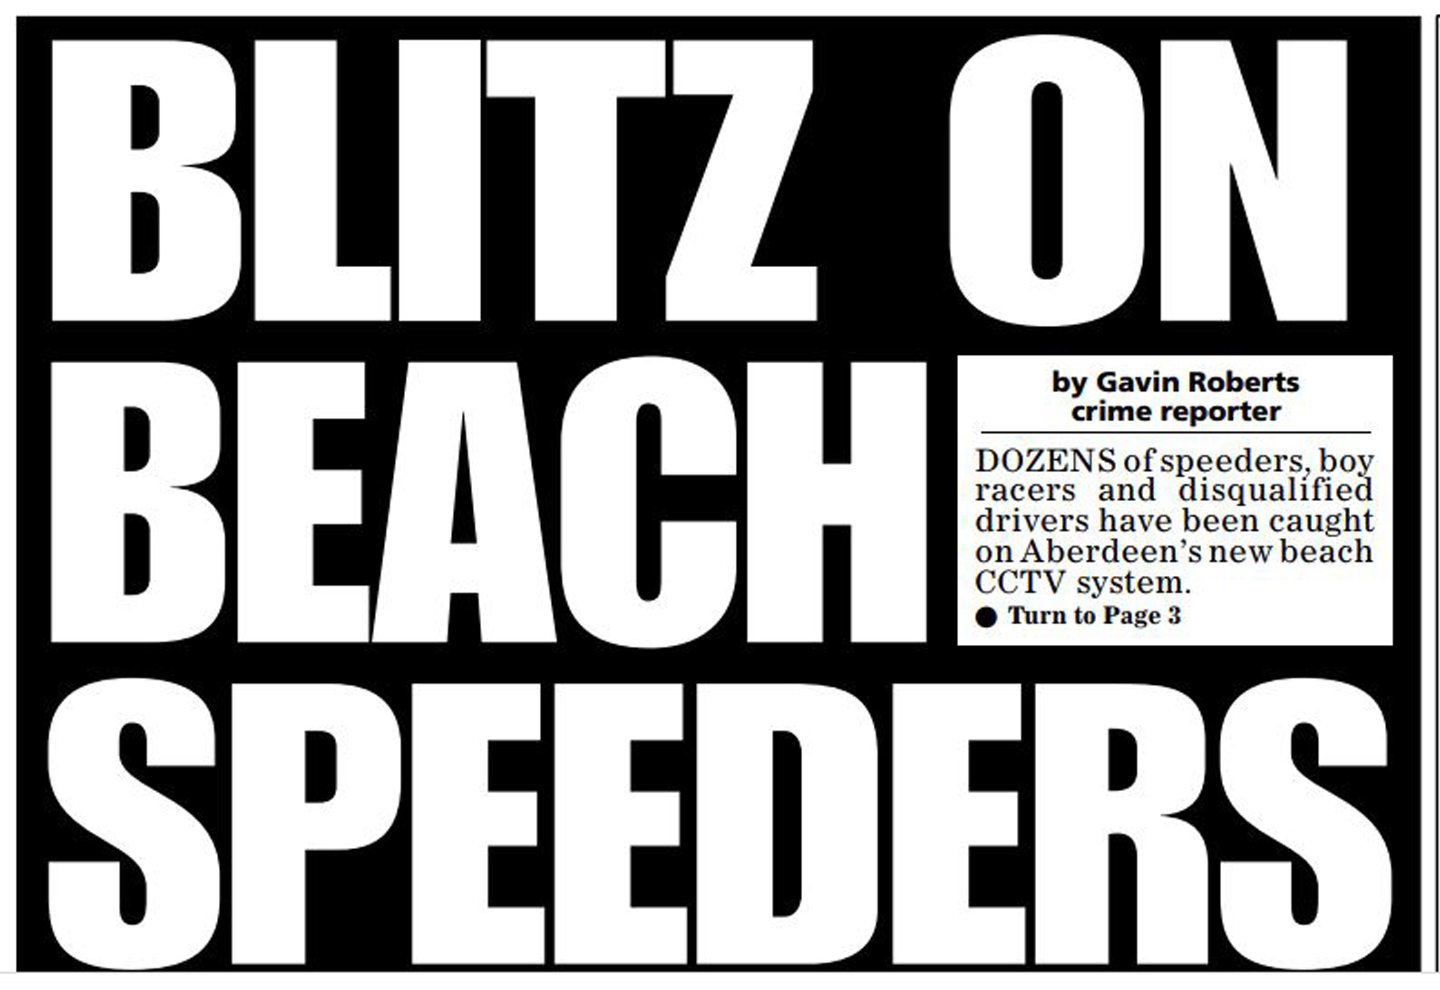 An Evening Express front page headline reading "Blitz on beach speeders"